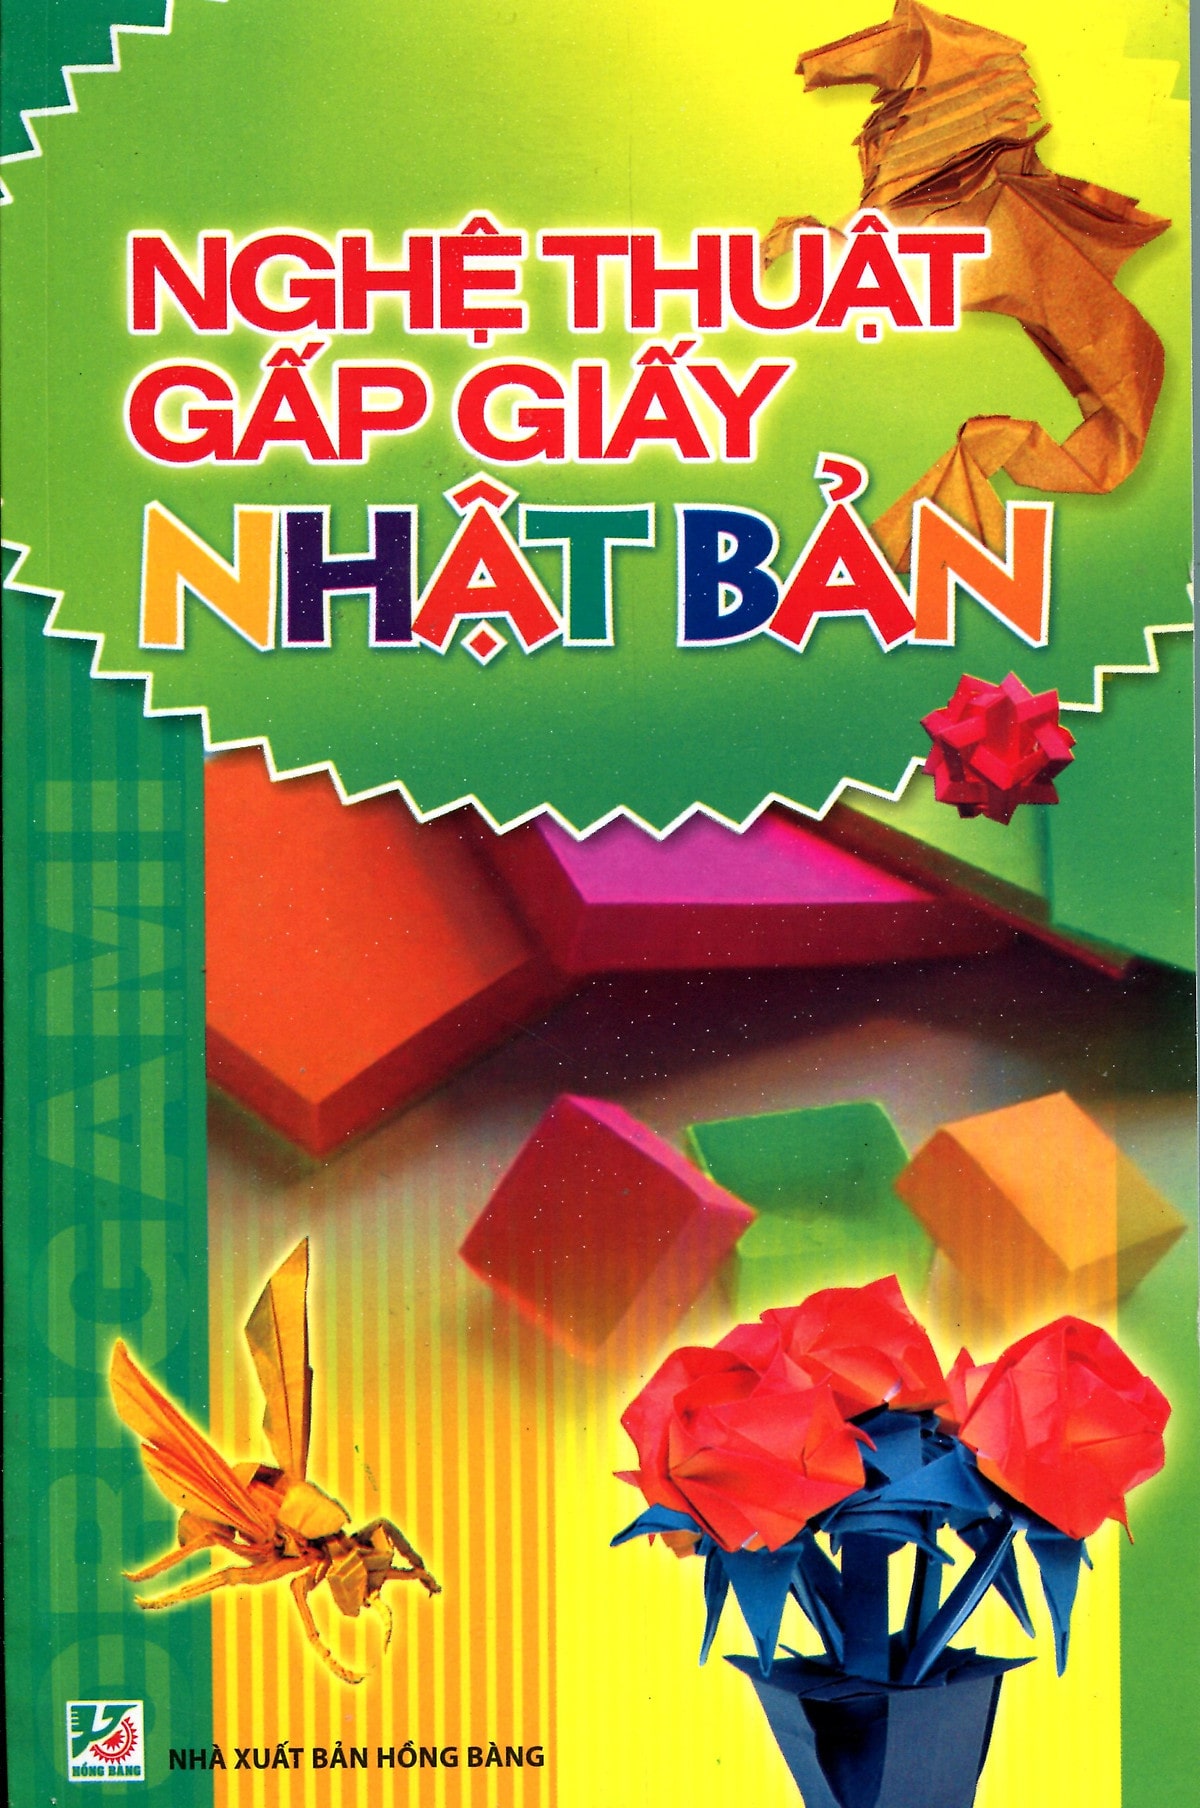 02 Hinh Anh Sach Nghe Thuat Gap Giay Nhat Ban